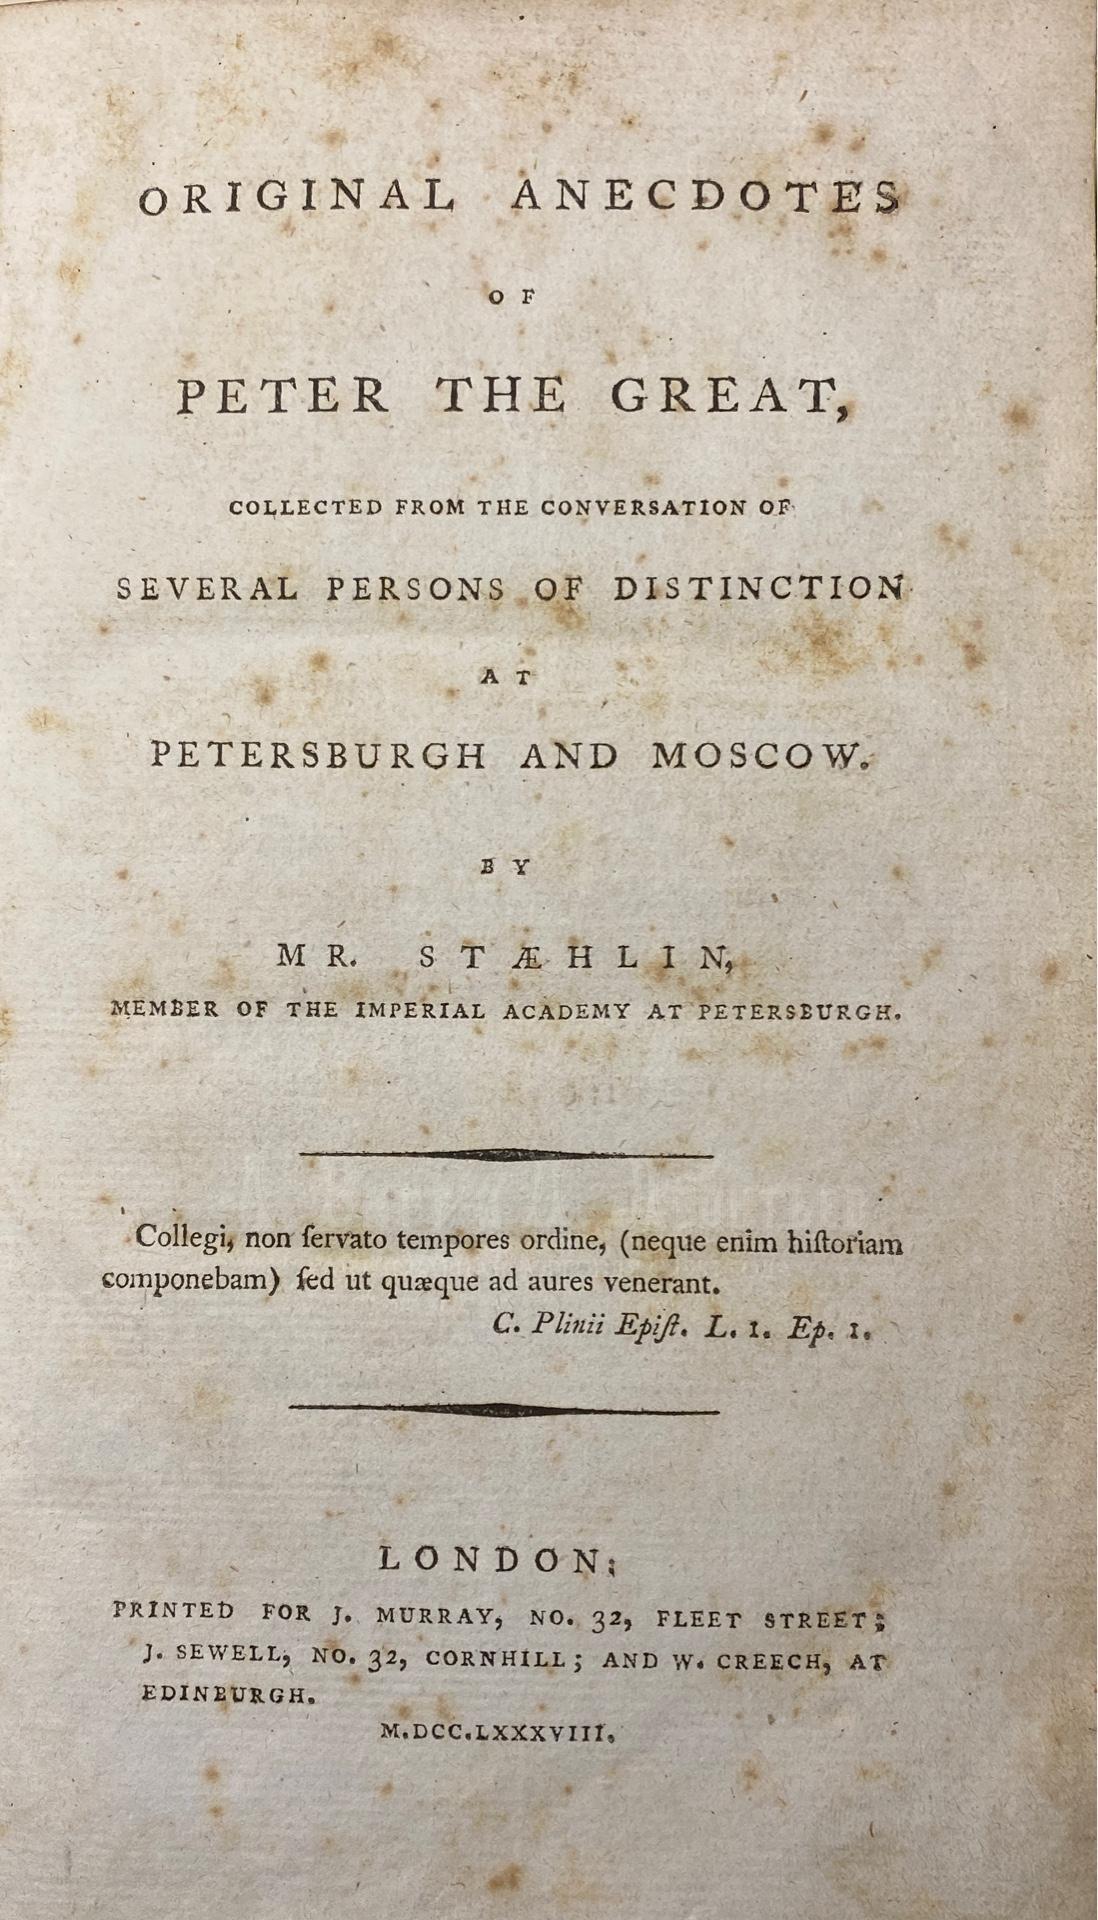 Original anecdotes jf Peter the Great. 1788